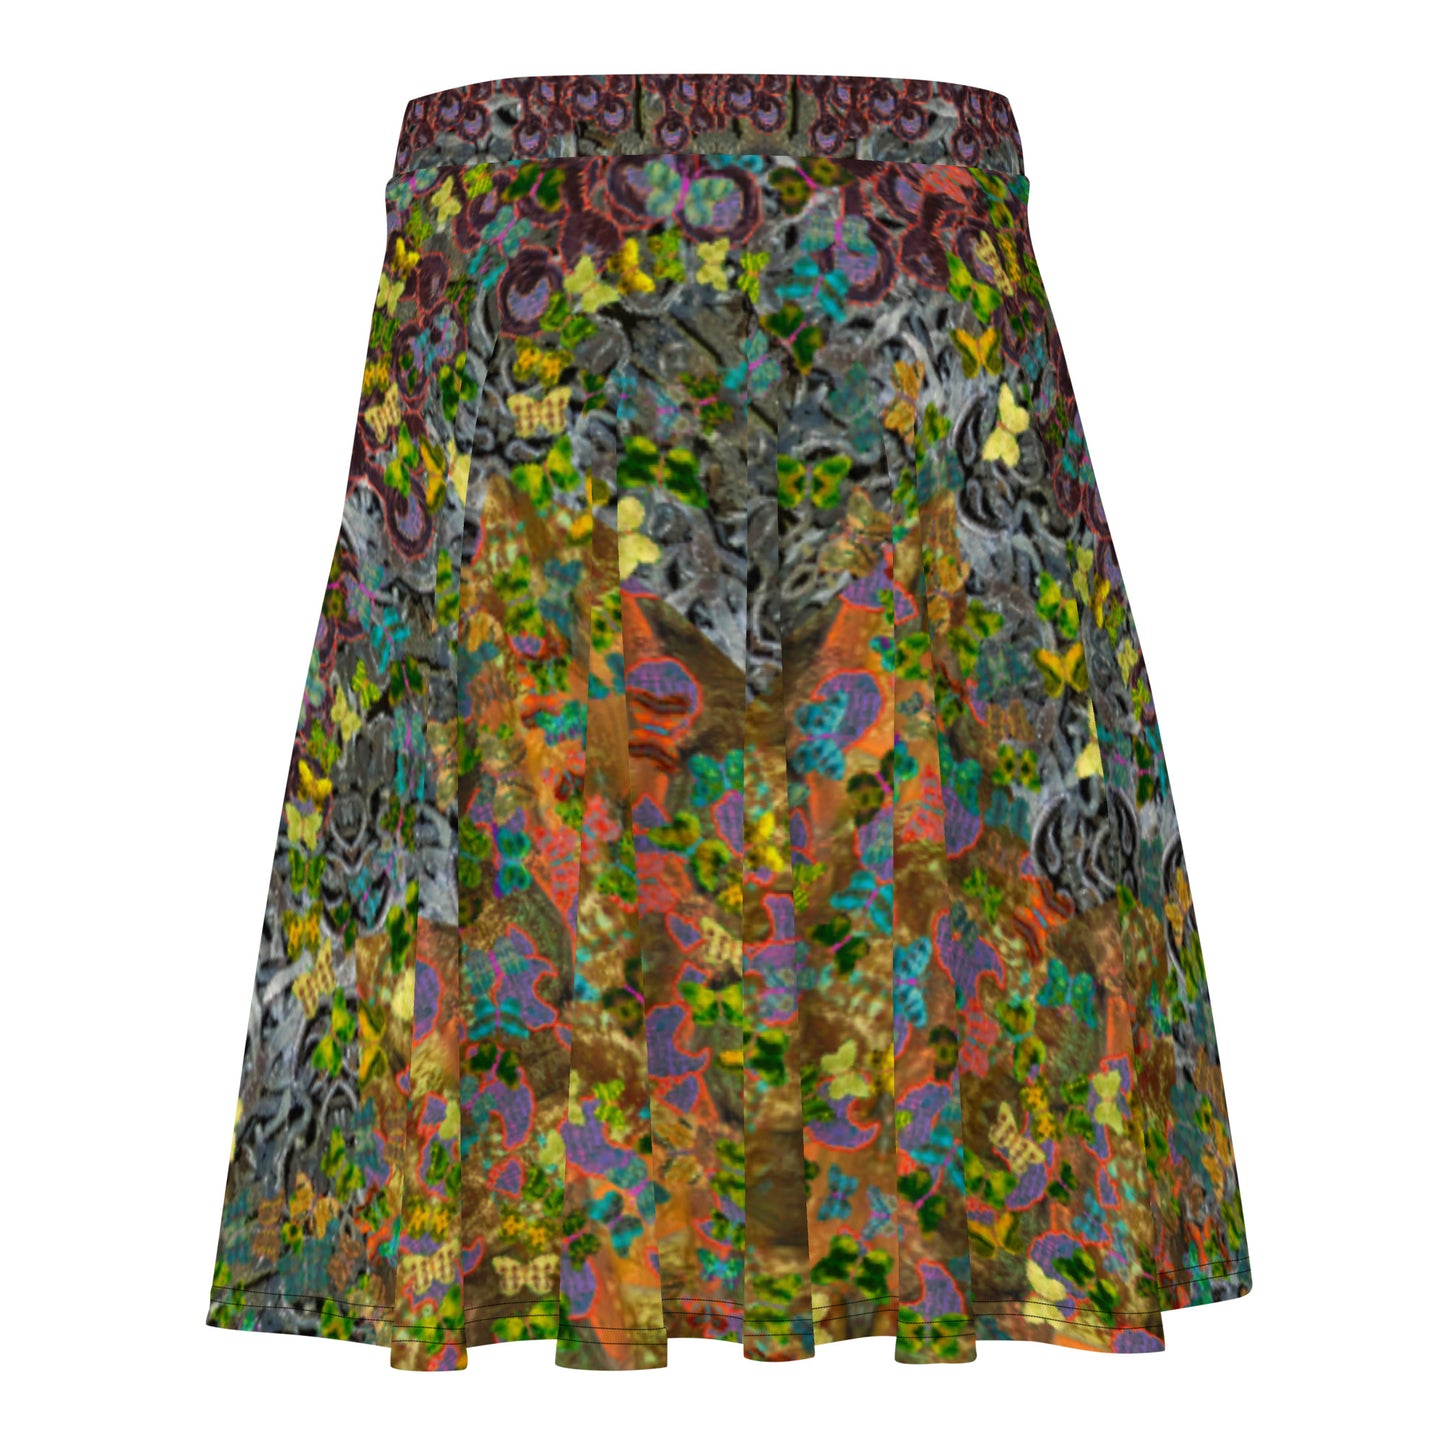 Skater Skirt (Her/They)(Butterfly Glade Shoal Solstice GNHV 8.6) RJSTH@Fabric#6 RJSTHw2021 RJS